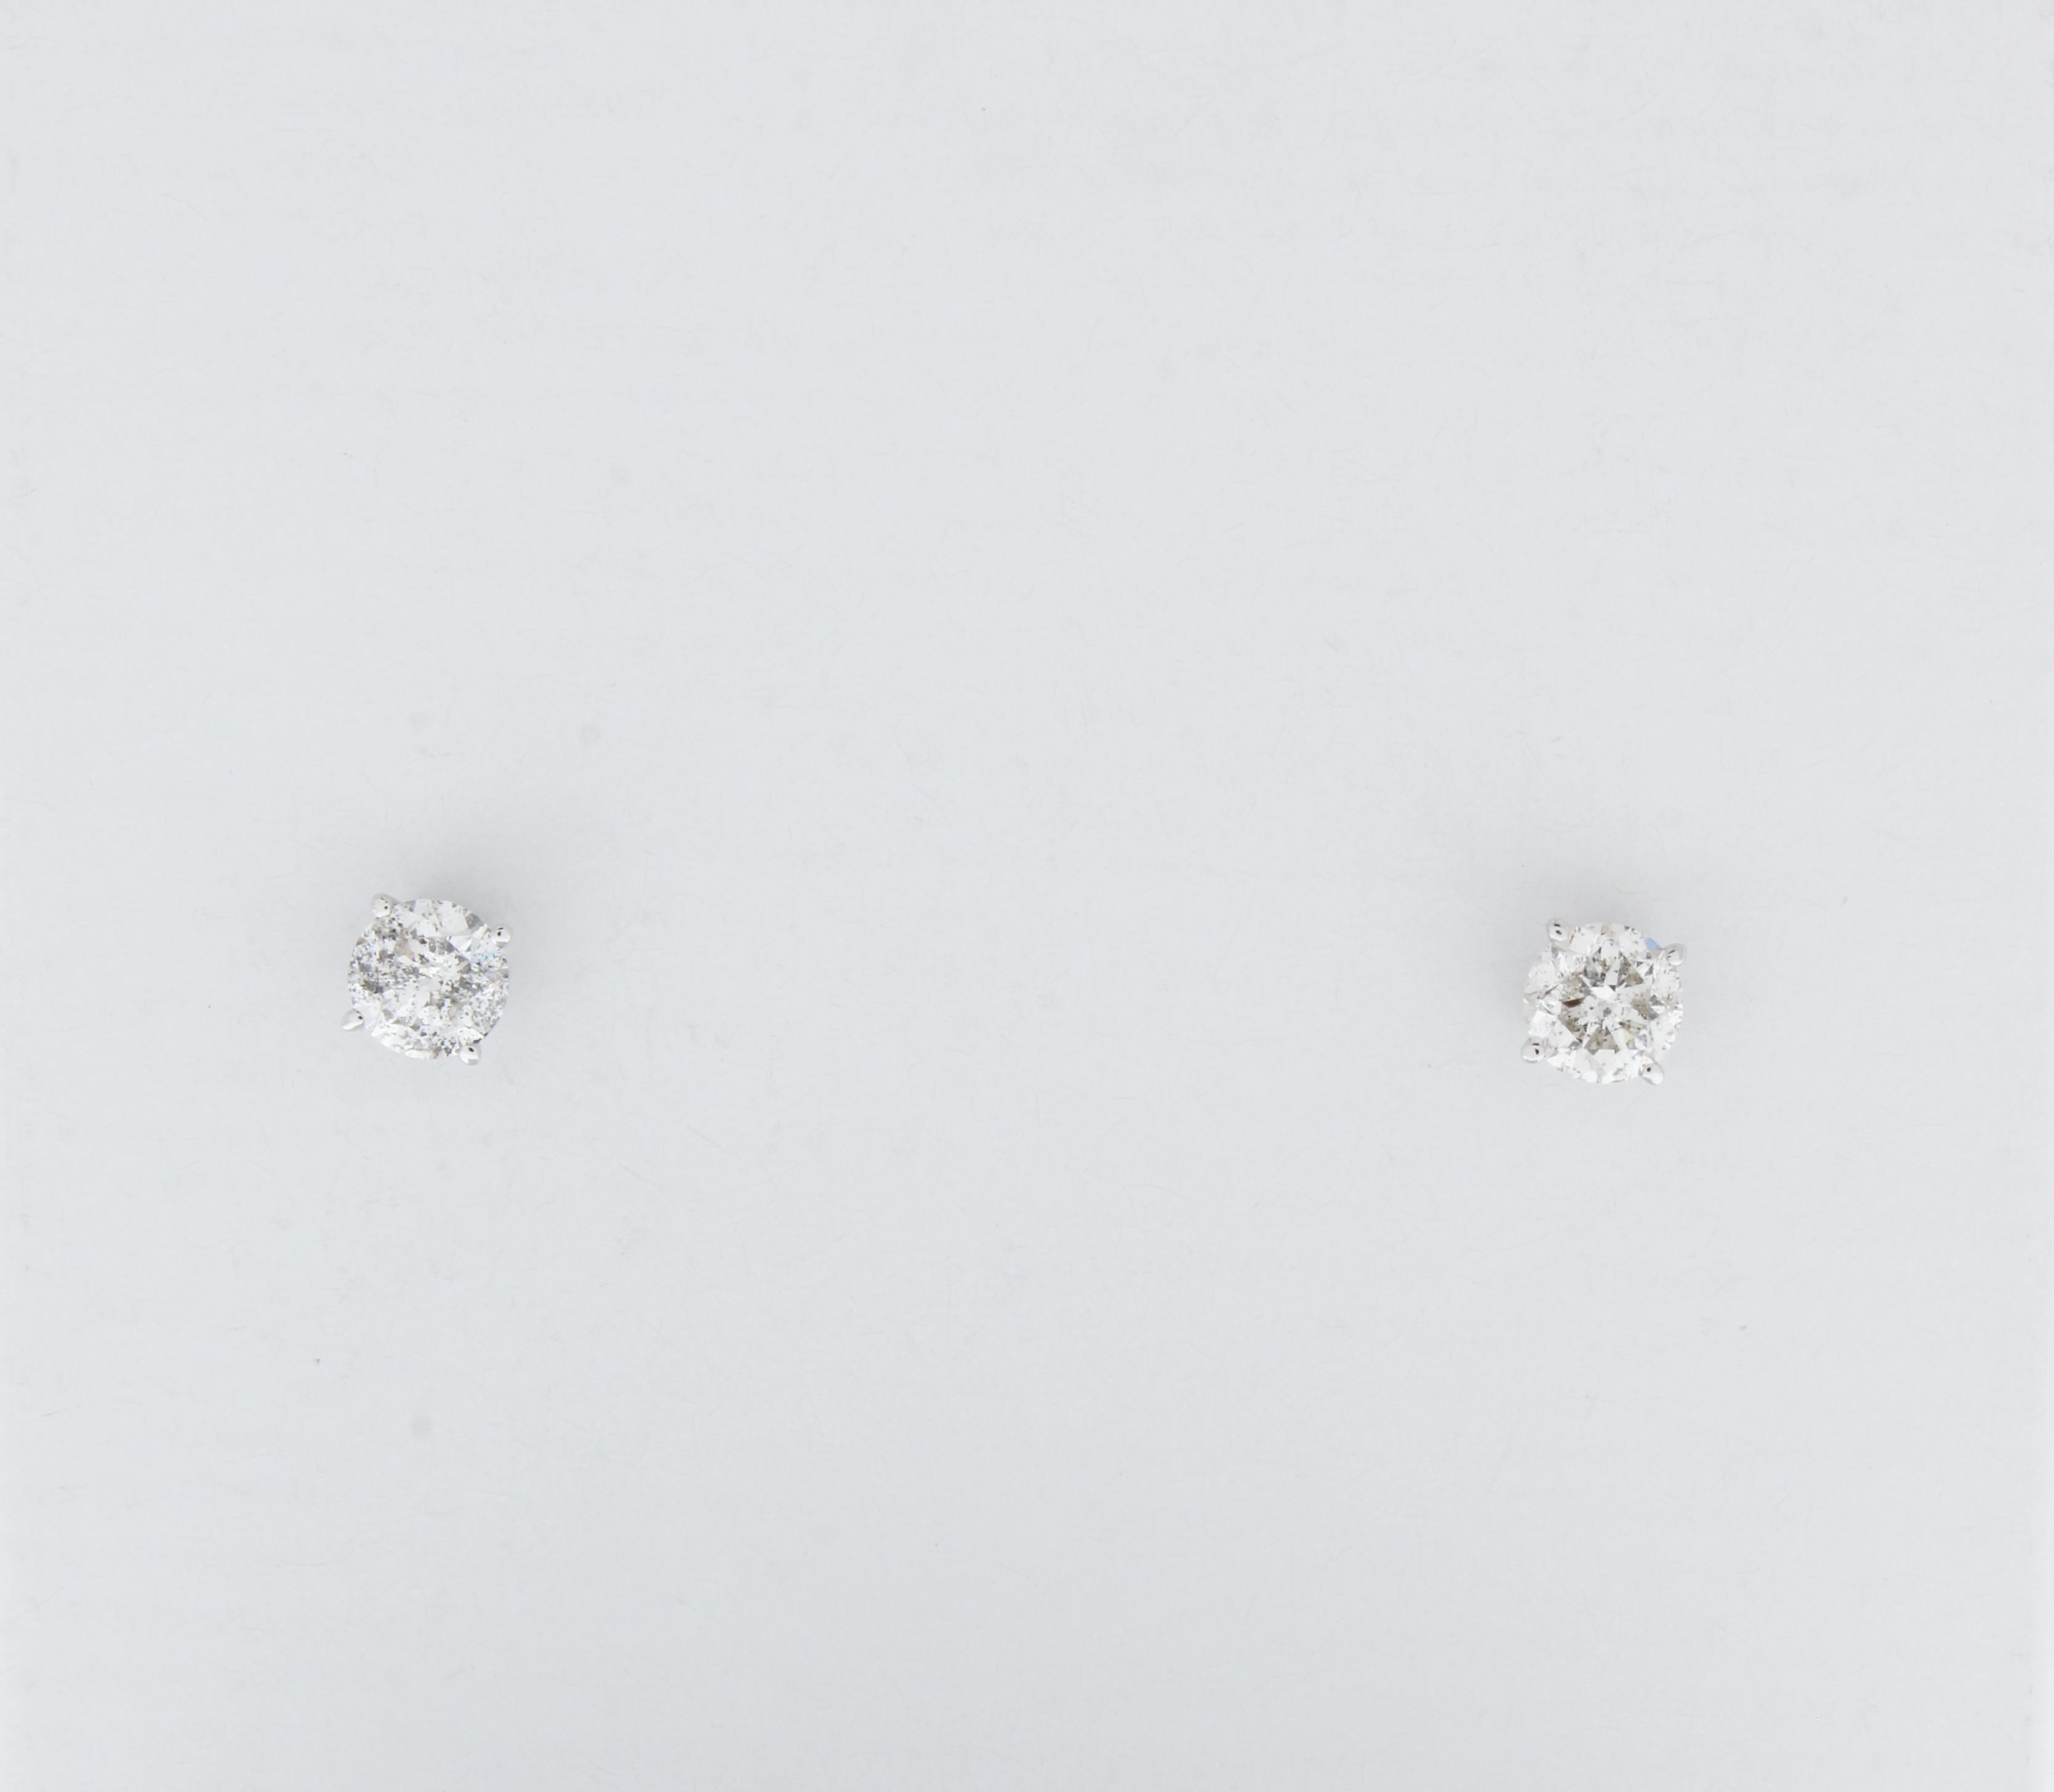 .75 carat diamond earrings